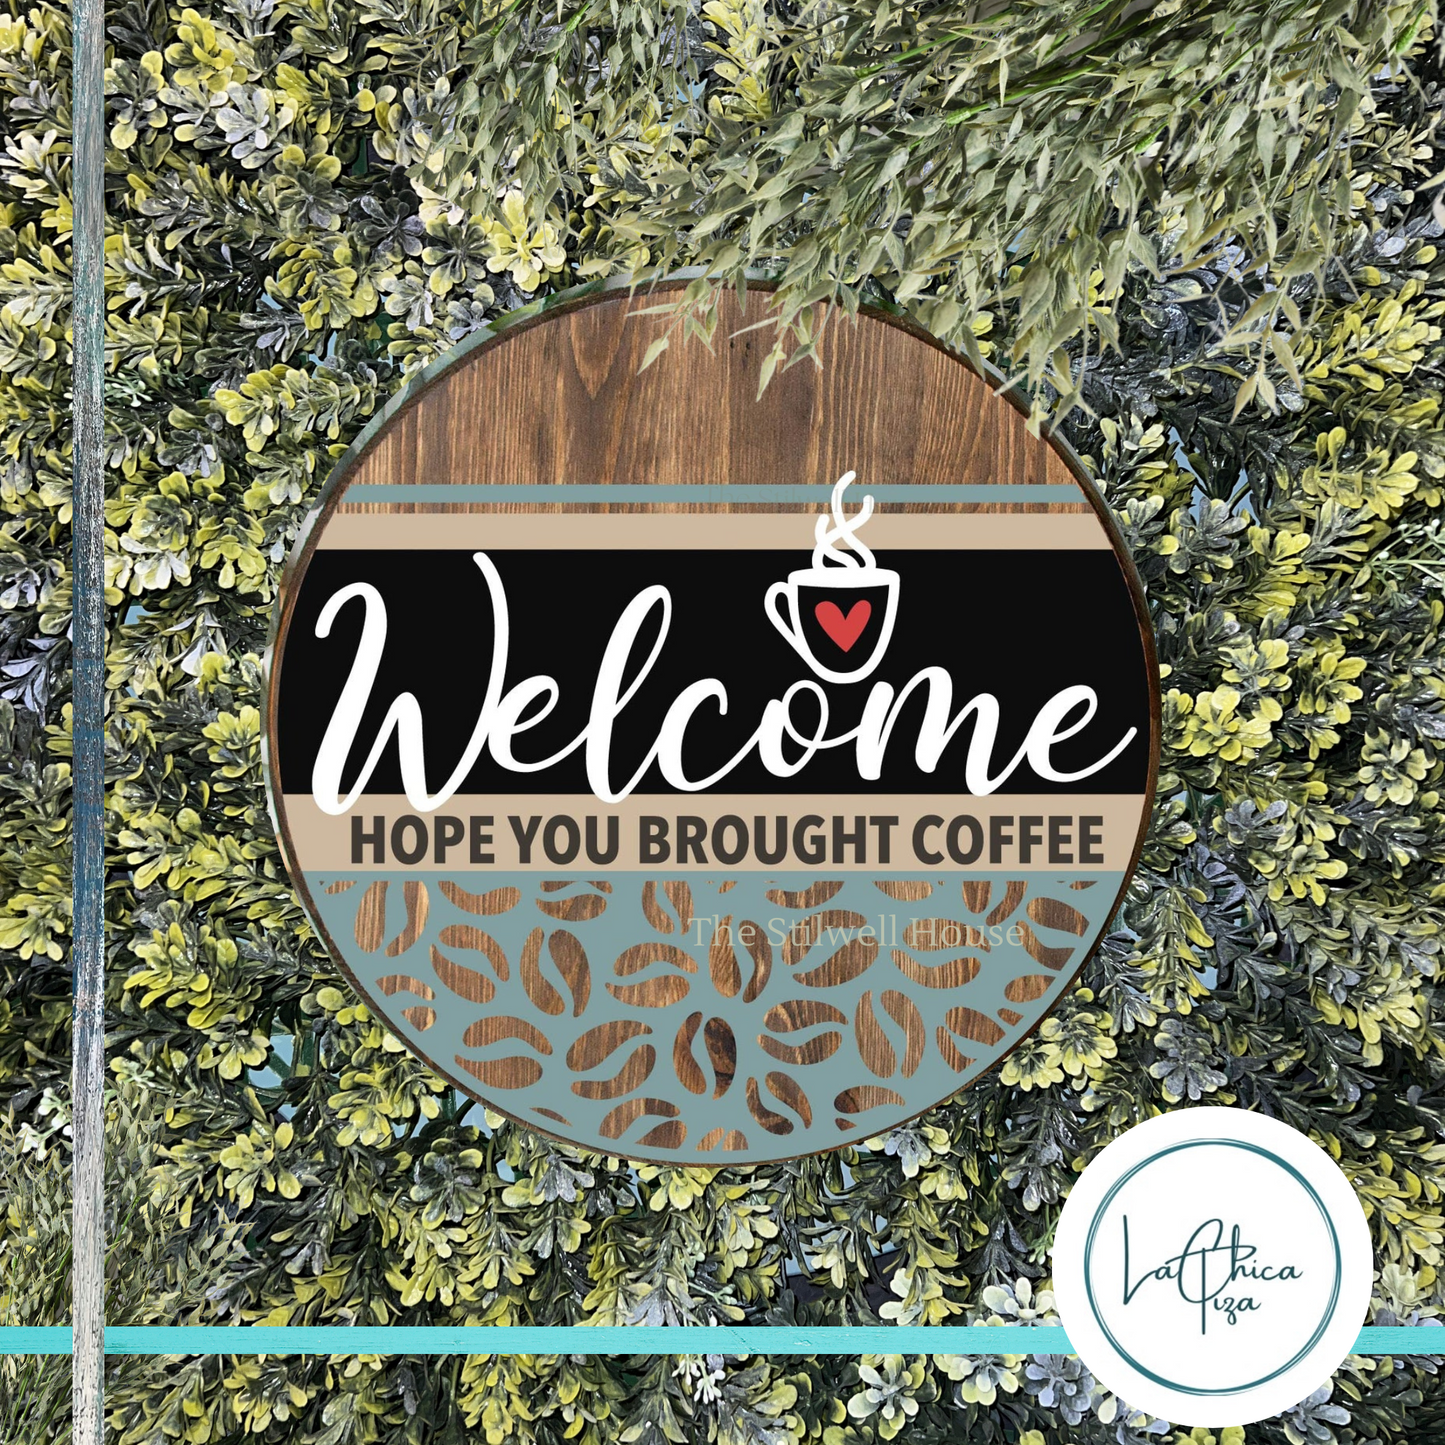 Welcome, We hope you brought Coffee  - Round  Wood Door Sign | Hanger | ChicaTiza